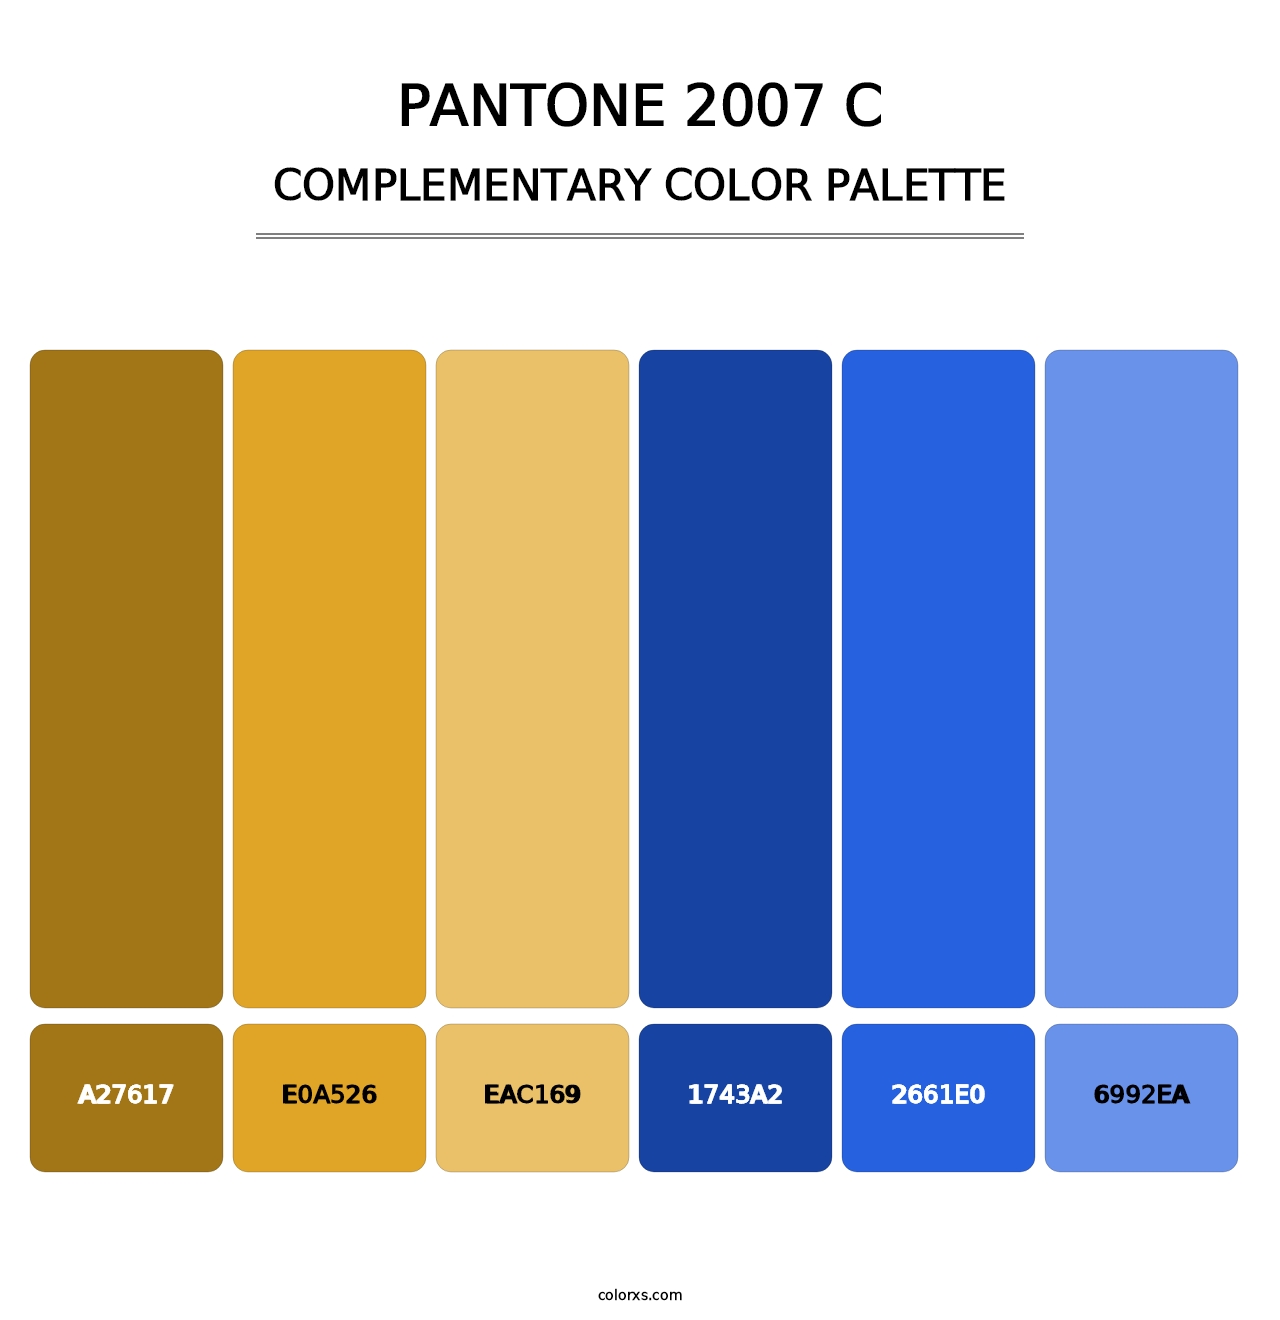 PANTONE 2007 C - Complementary Color Palette